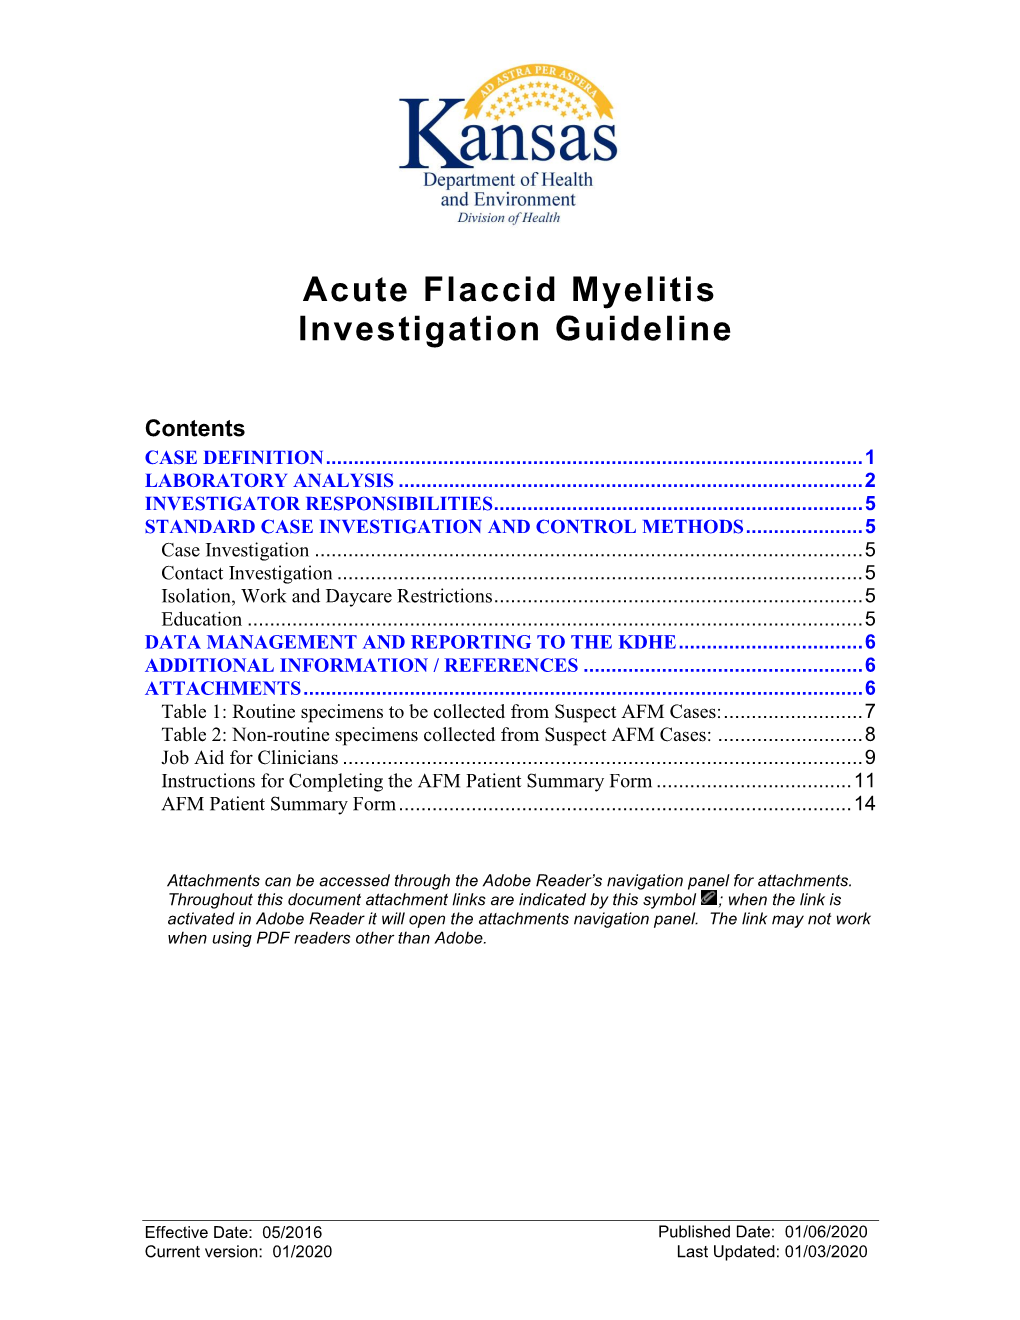 Acute Flaccid Myelitis Investigation Guideline